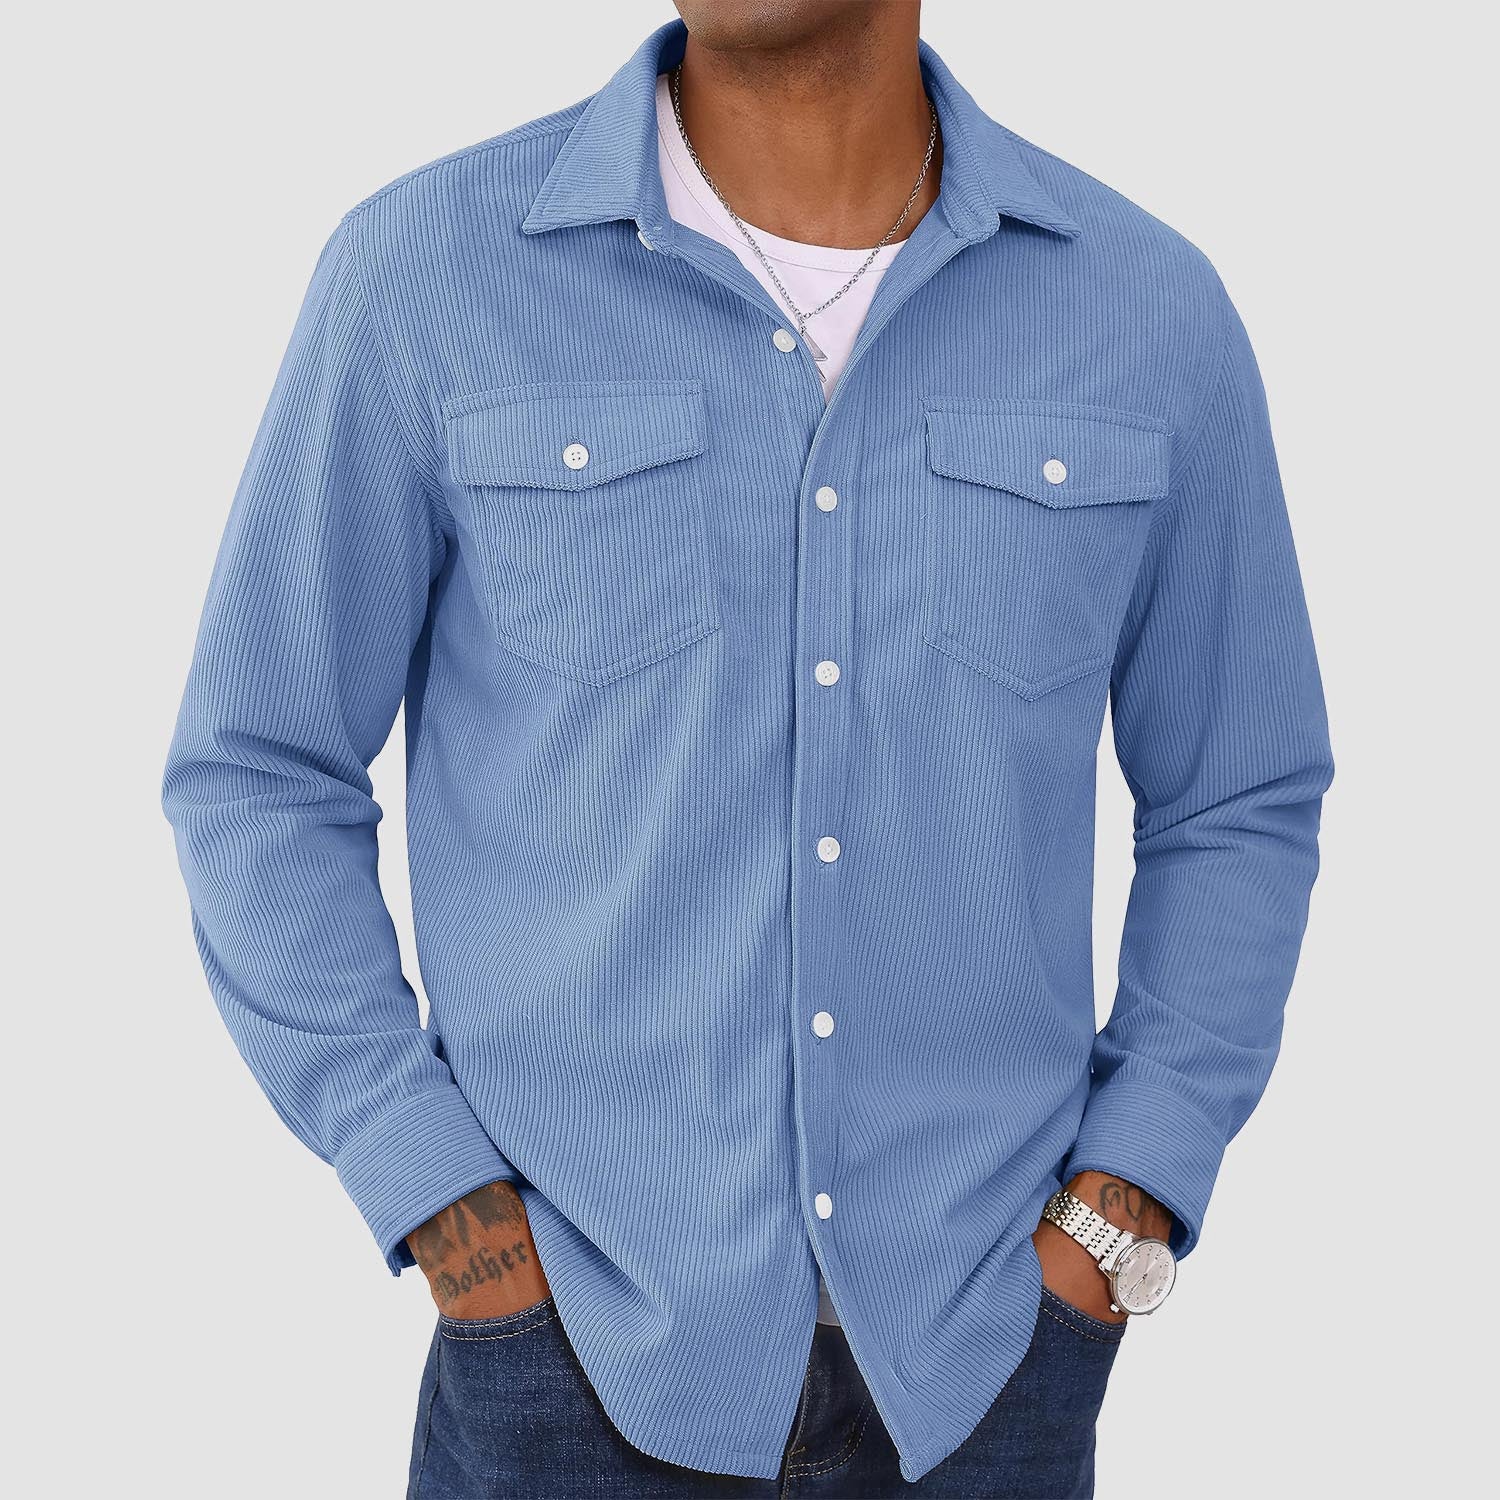 MAGCOMSEN Work Shirts for Men Long Sleeve Button Up Work Shirts